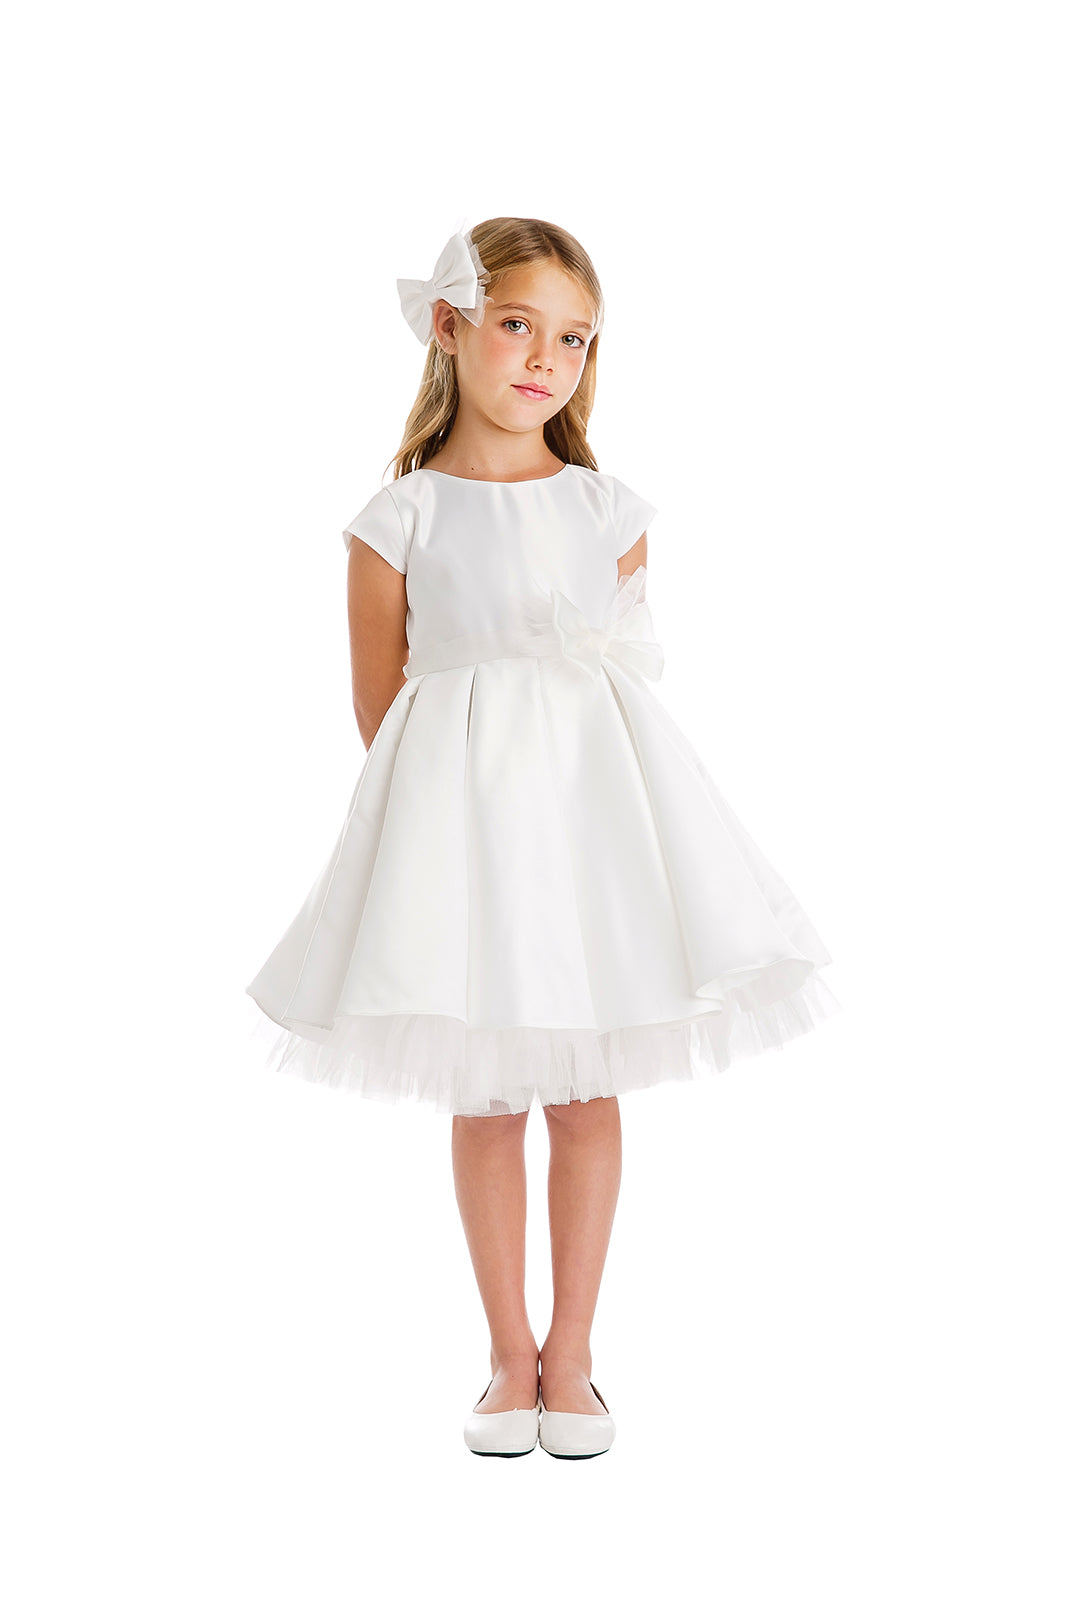 Little Girl Dress with Oversized Bow Baby - LAK711 - White - LA Merchandise